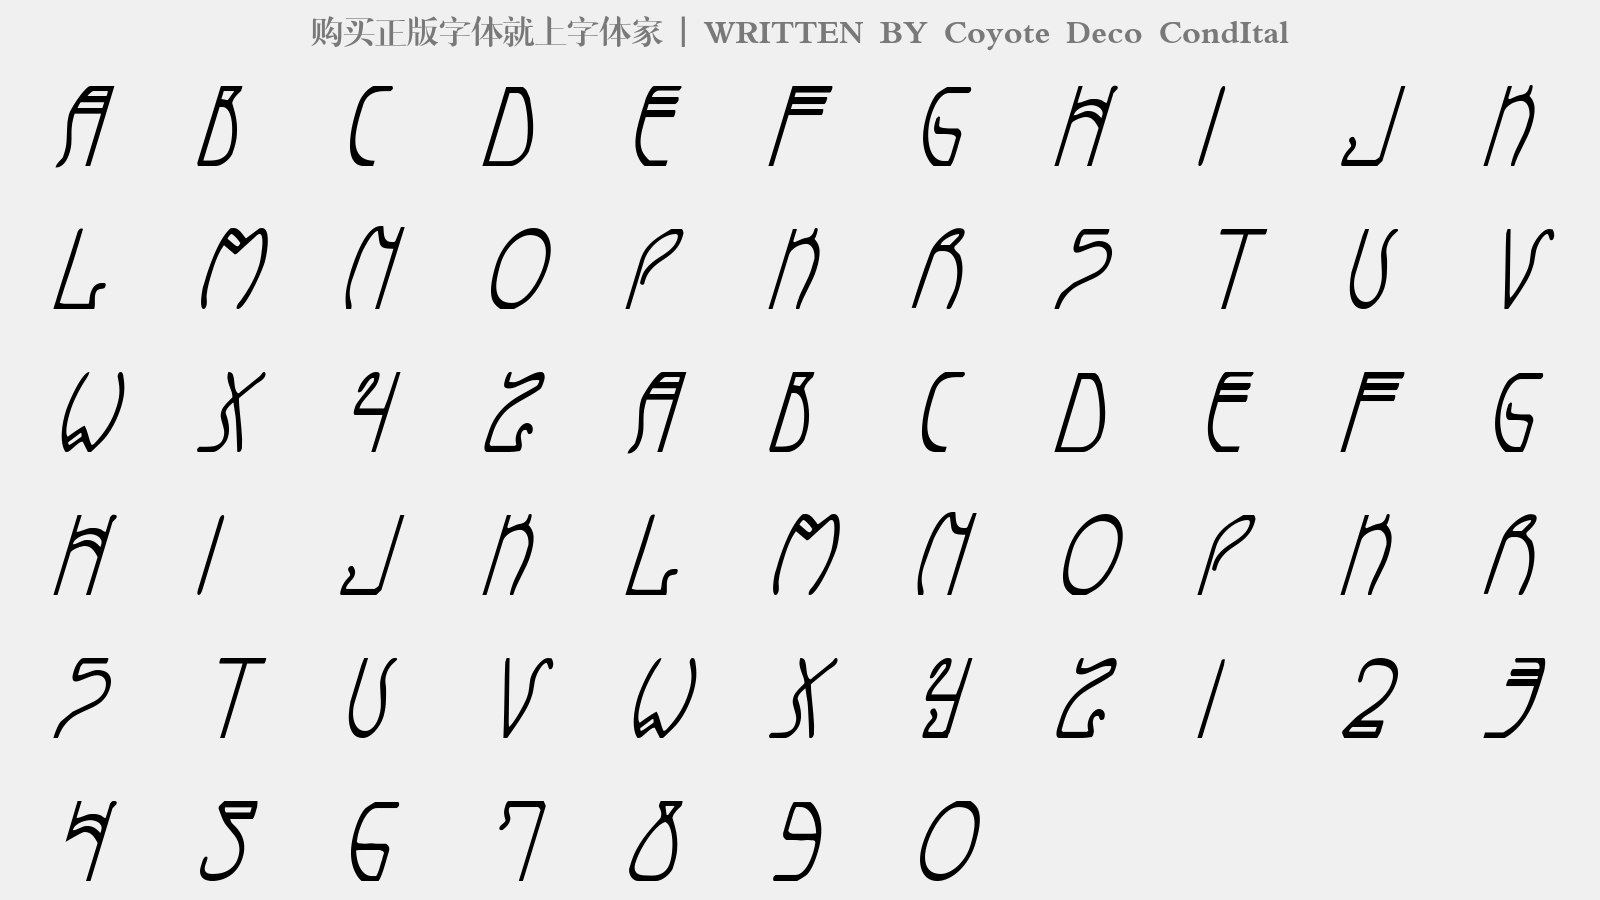 Coyote Deco CondItal - 大写字母/小写字母/数字